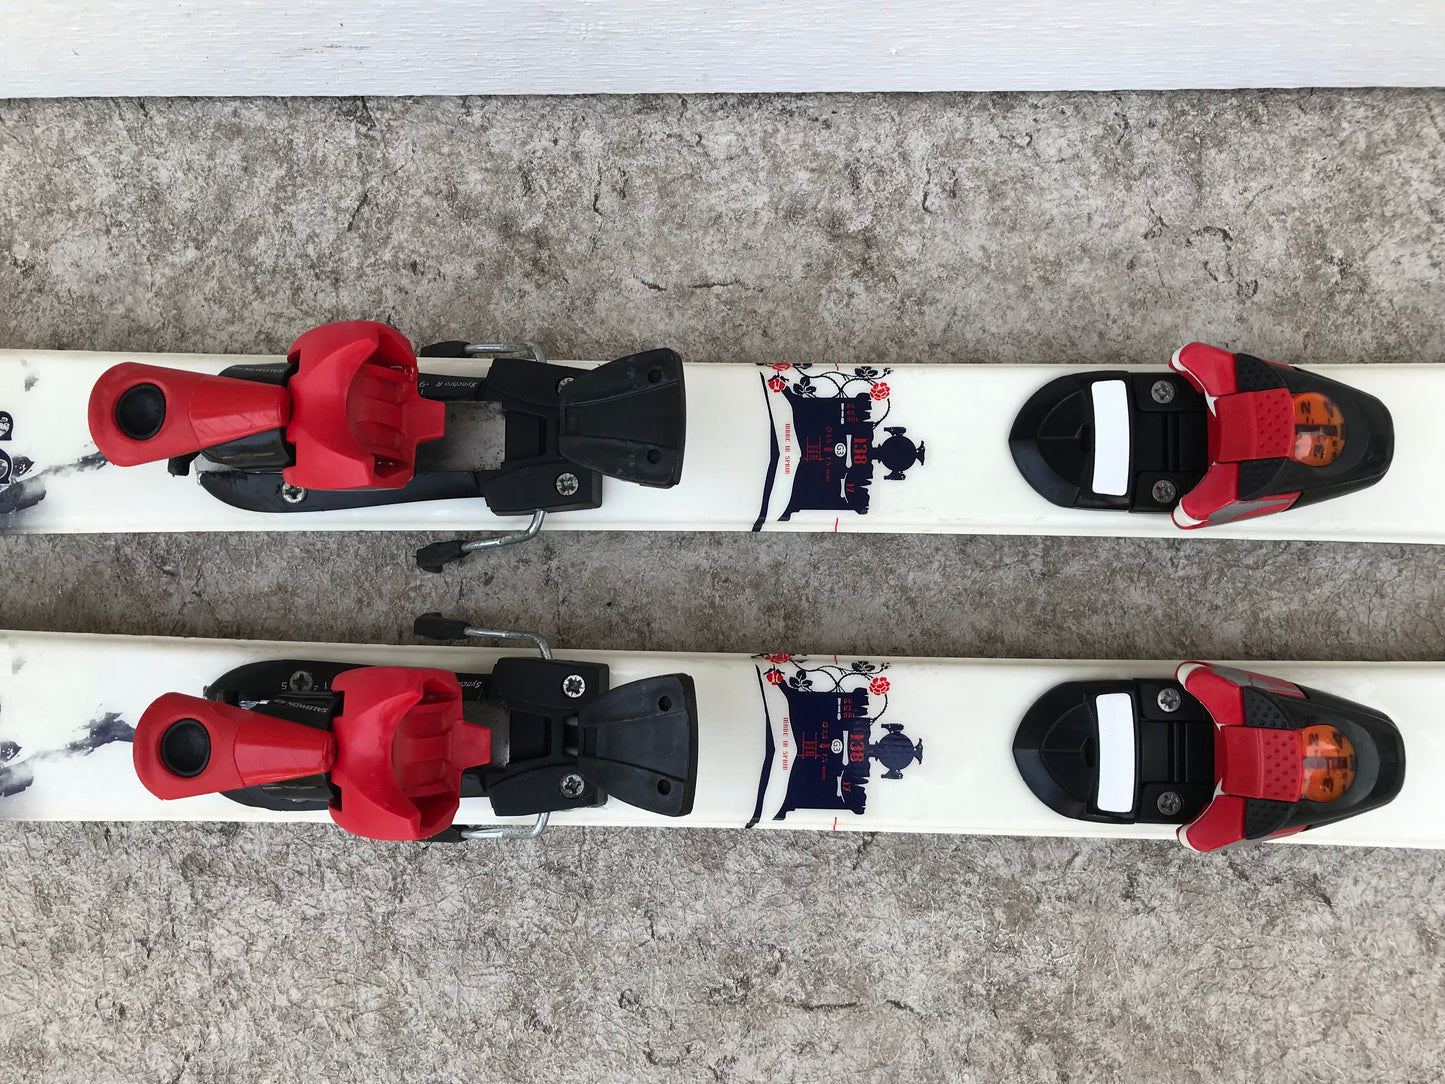 Ski 138 Rossignol White Red Grey Parabolic With Bindings